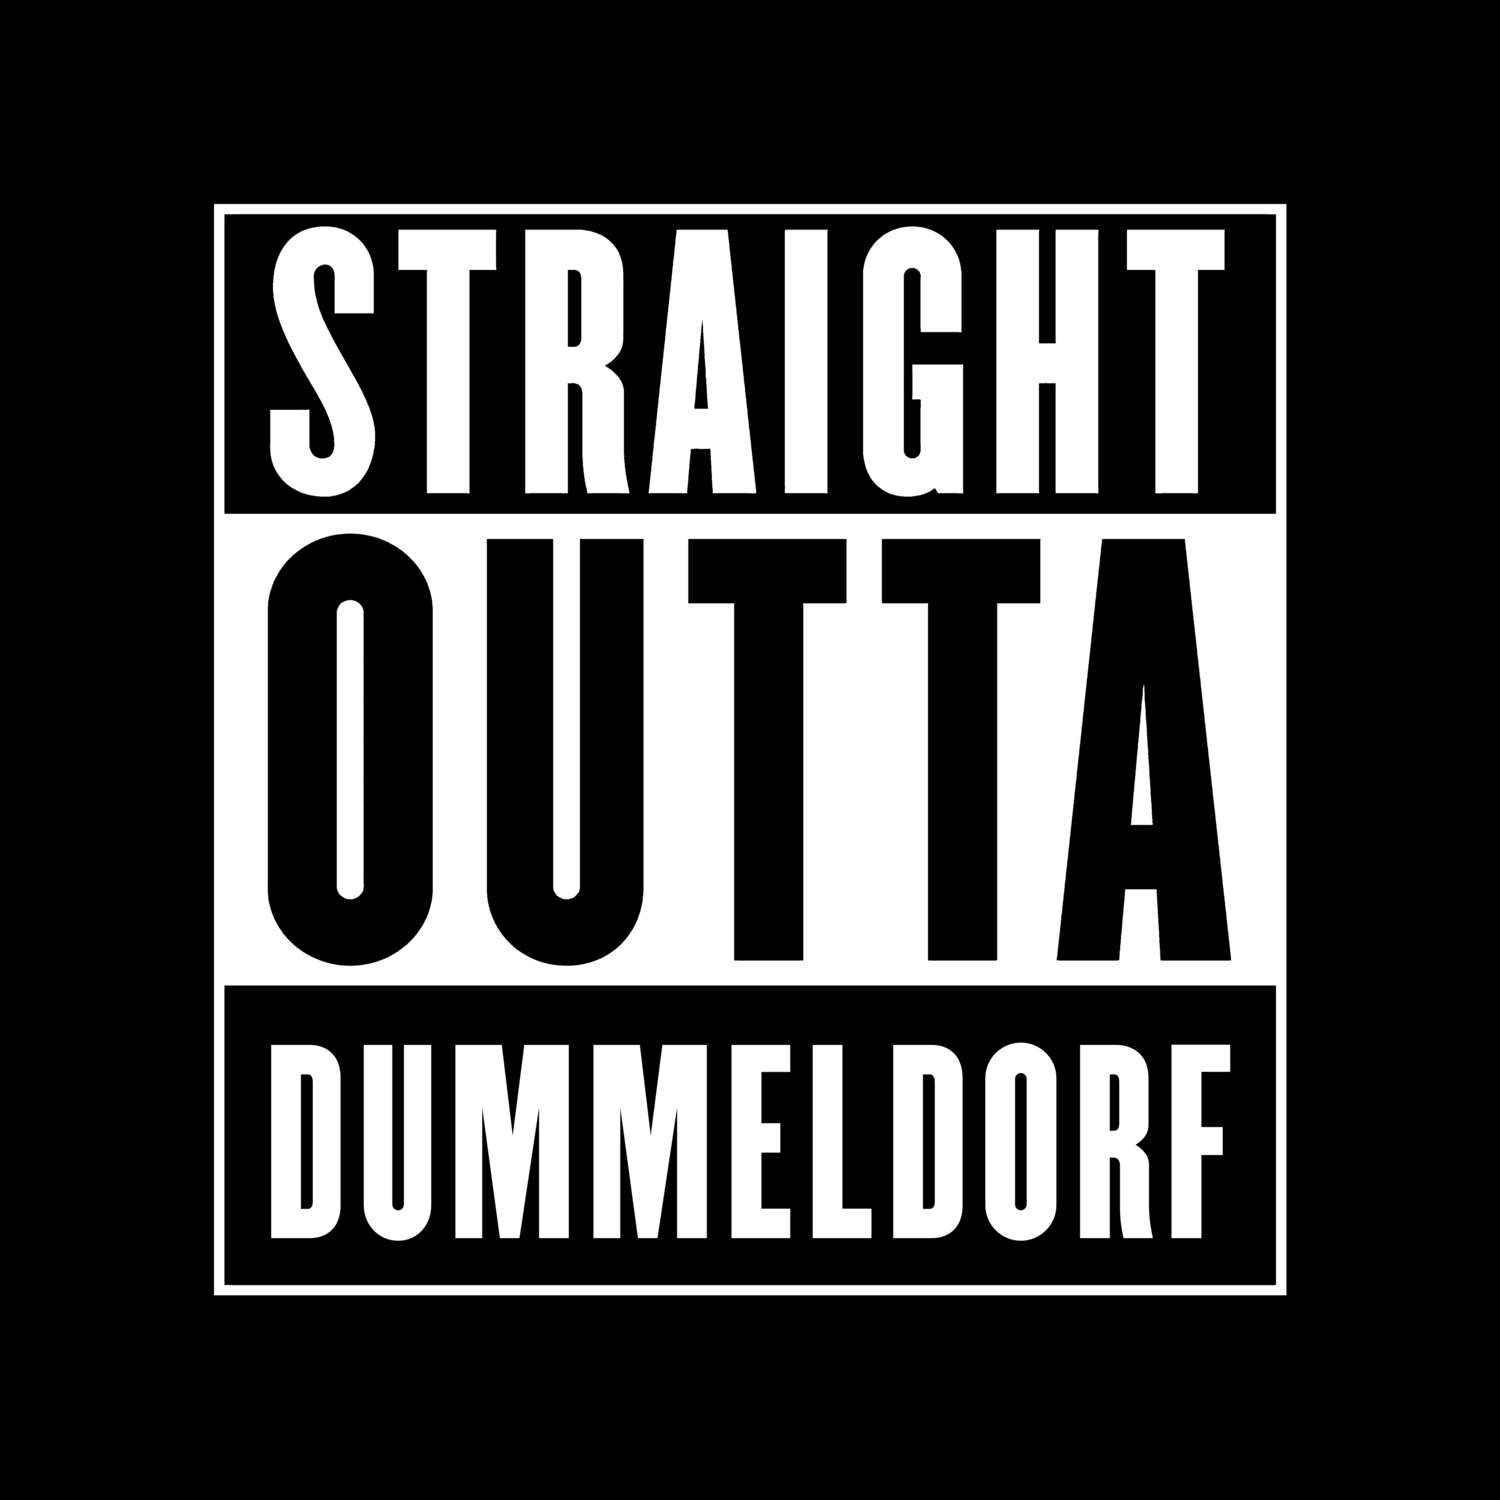 Dummeldorf T-Shirt »Straight Outta«